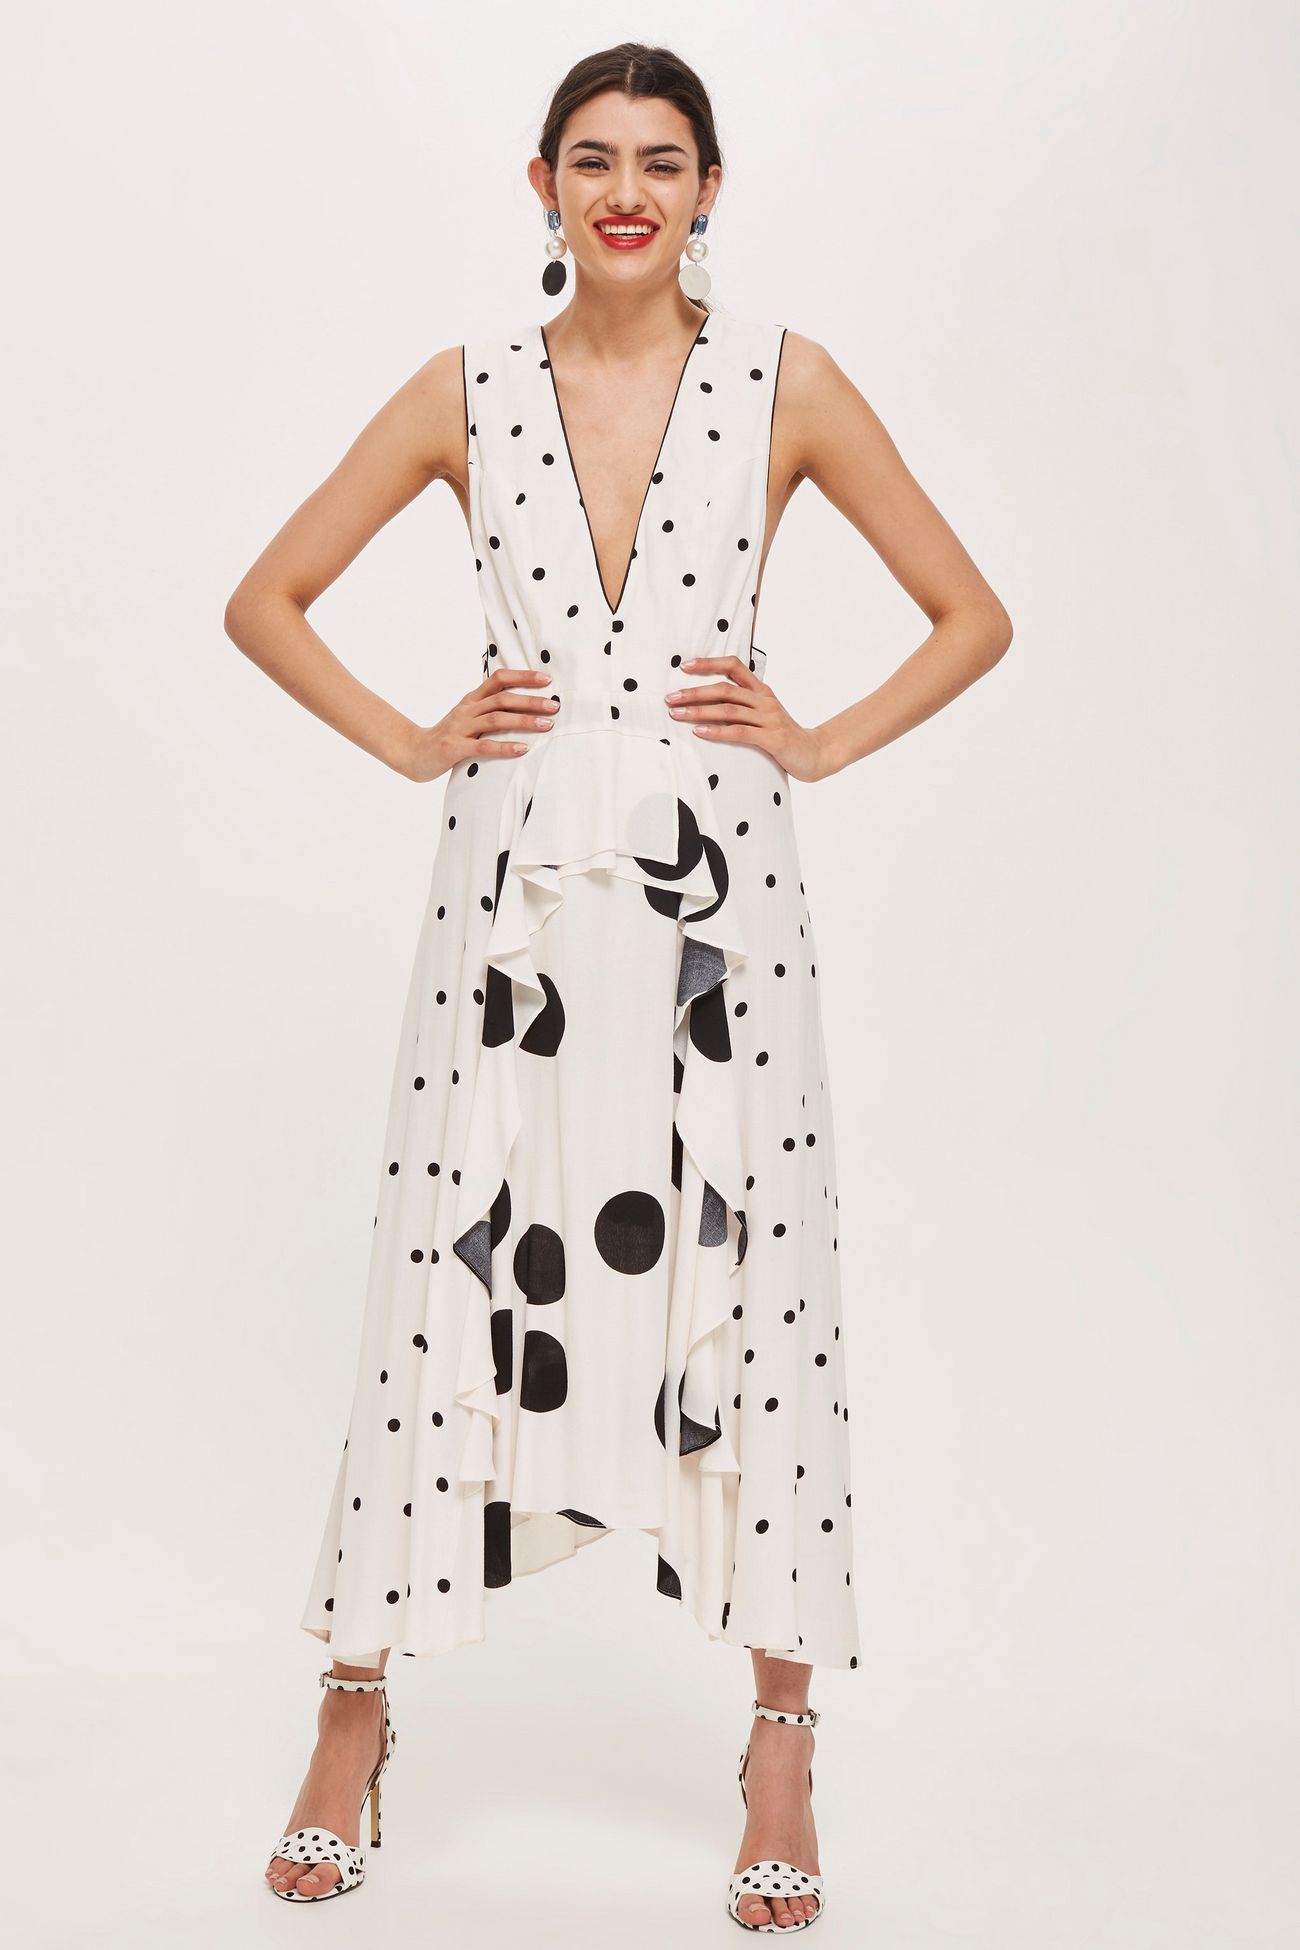 topshop black white polka dot dress